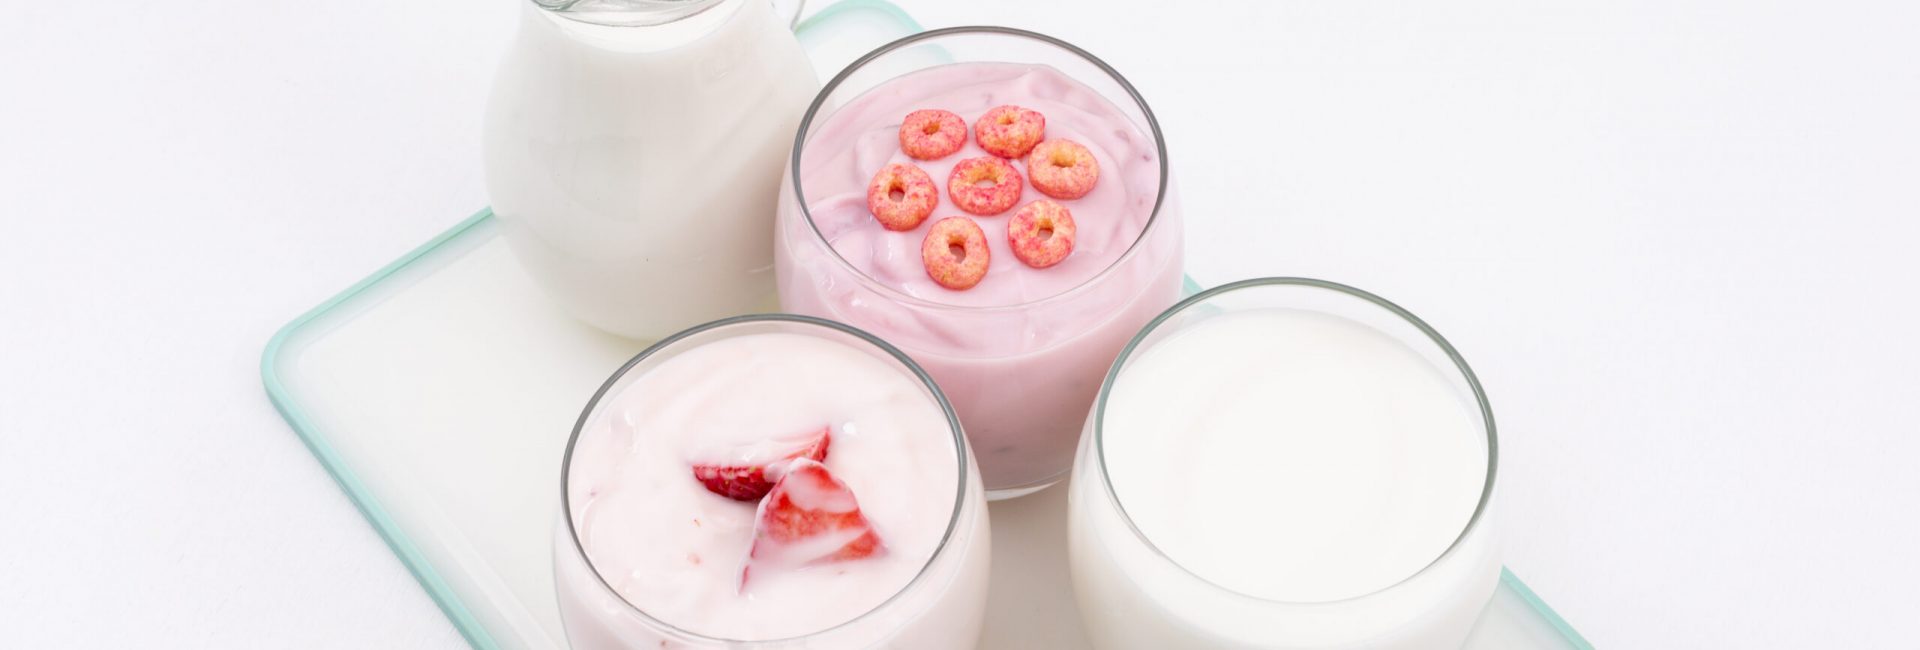 side-view-yogurt-milk-white-surface-horizontal